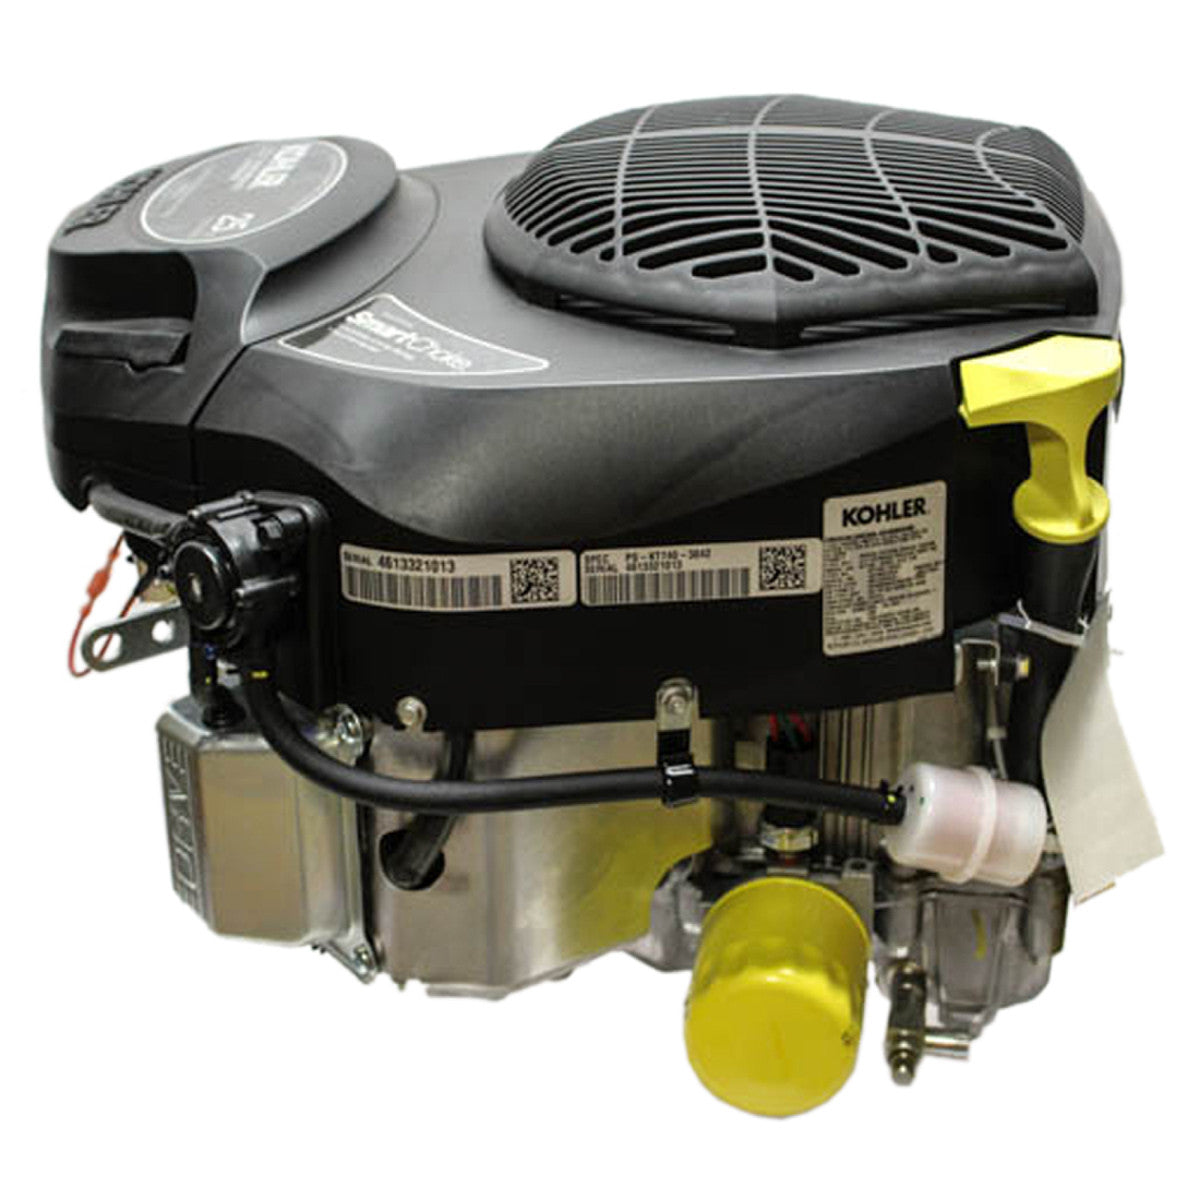 Kohler 7000 Series 25HP Replacement Engine #KT740-3042